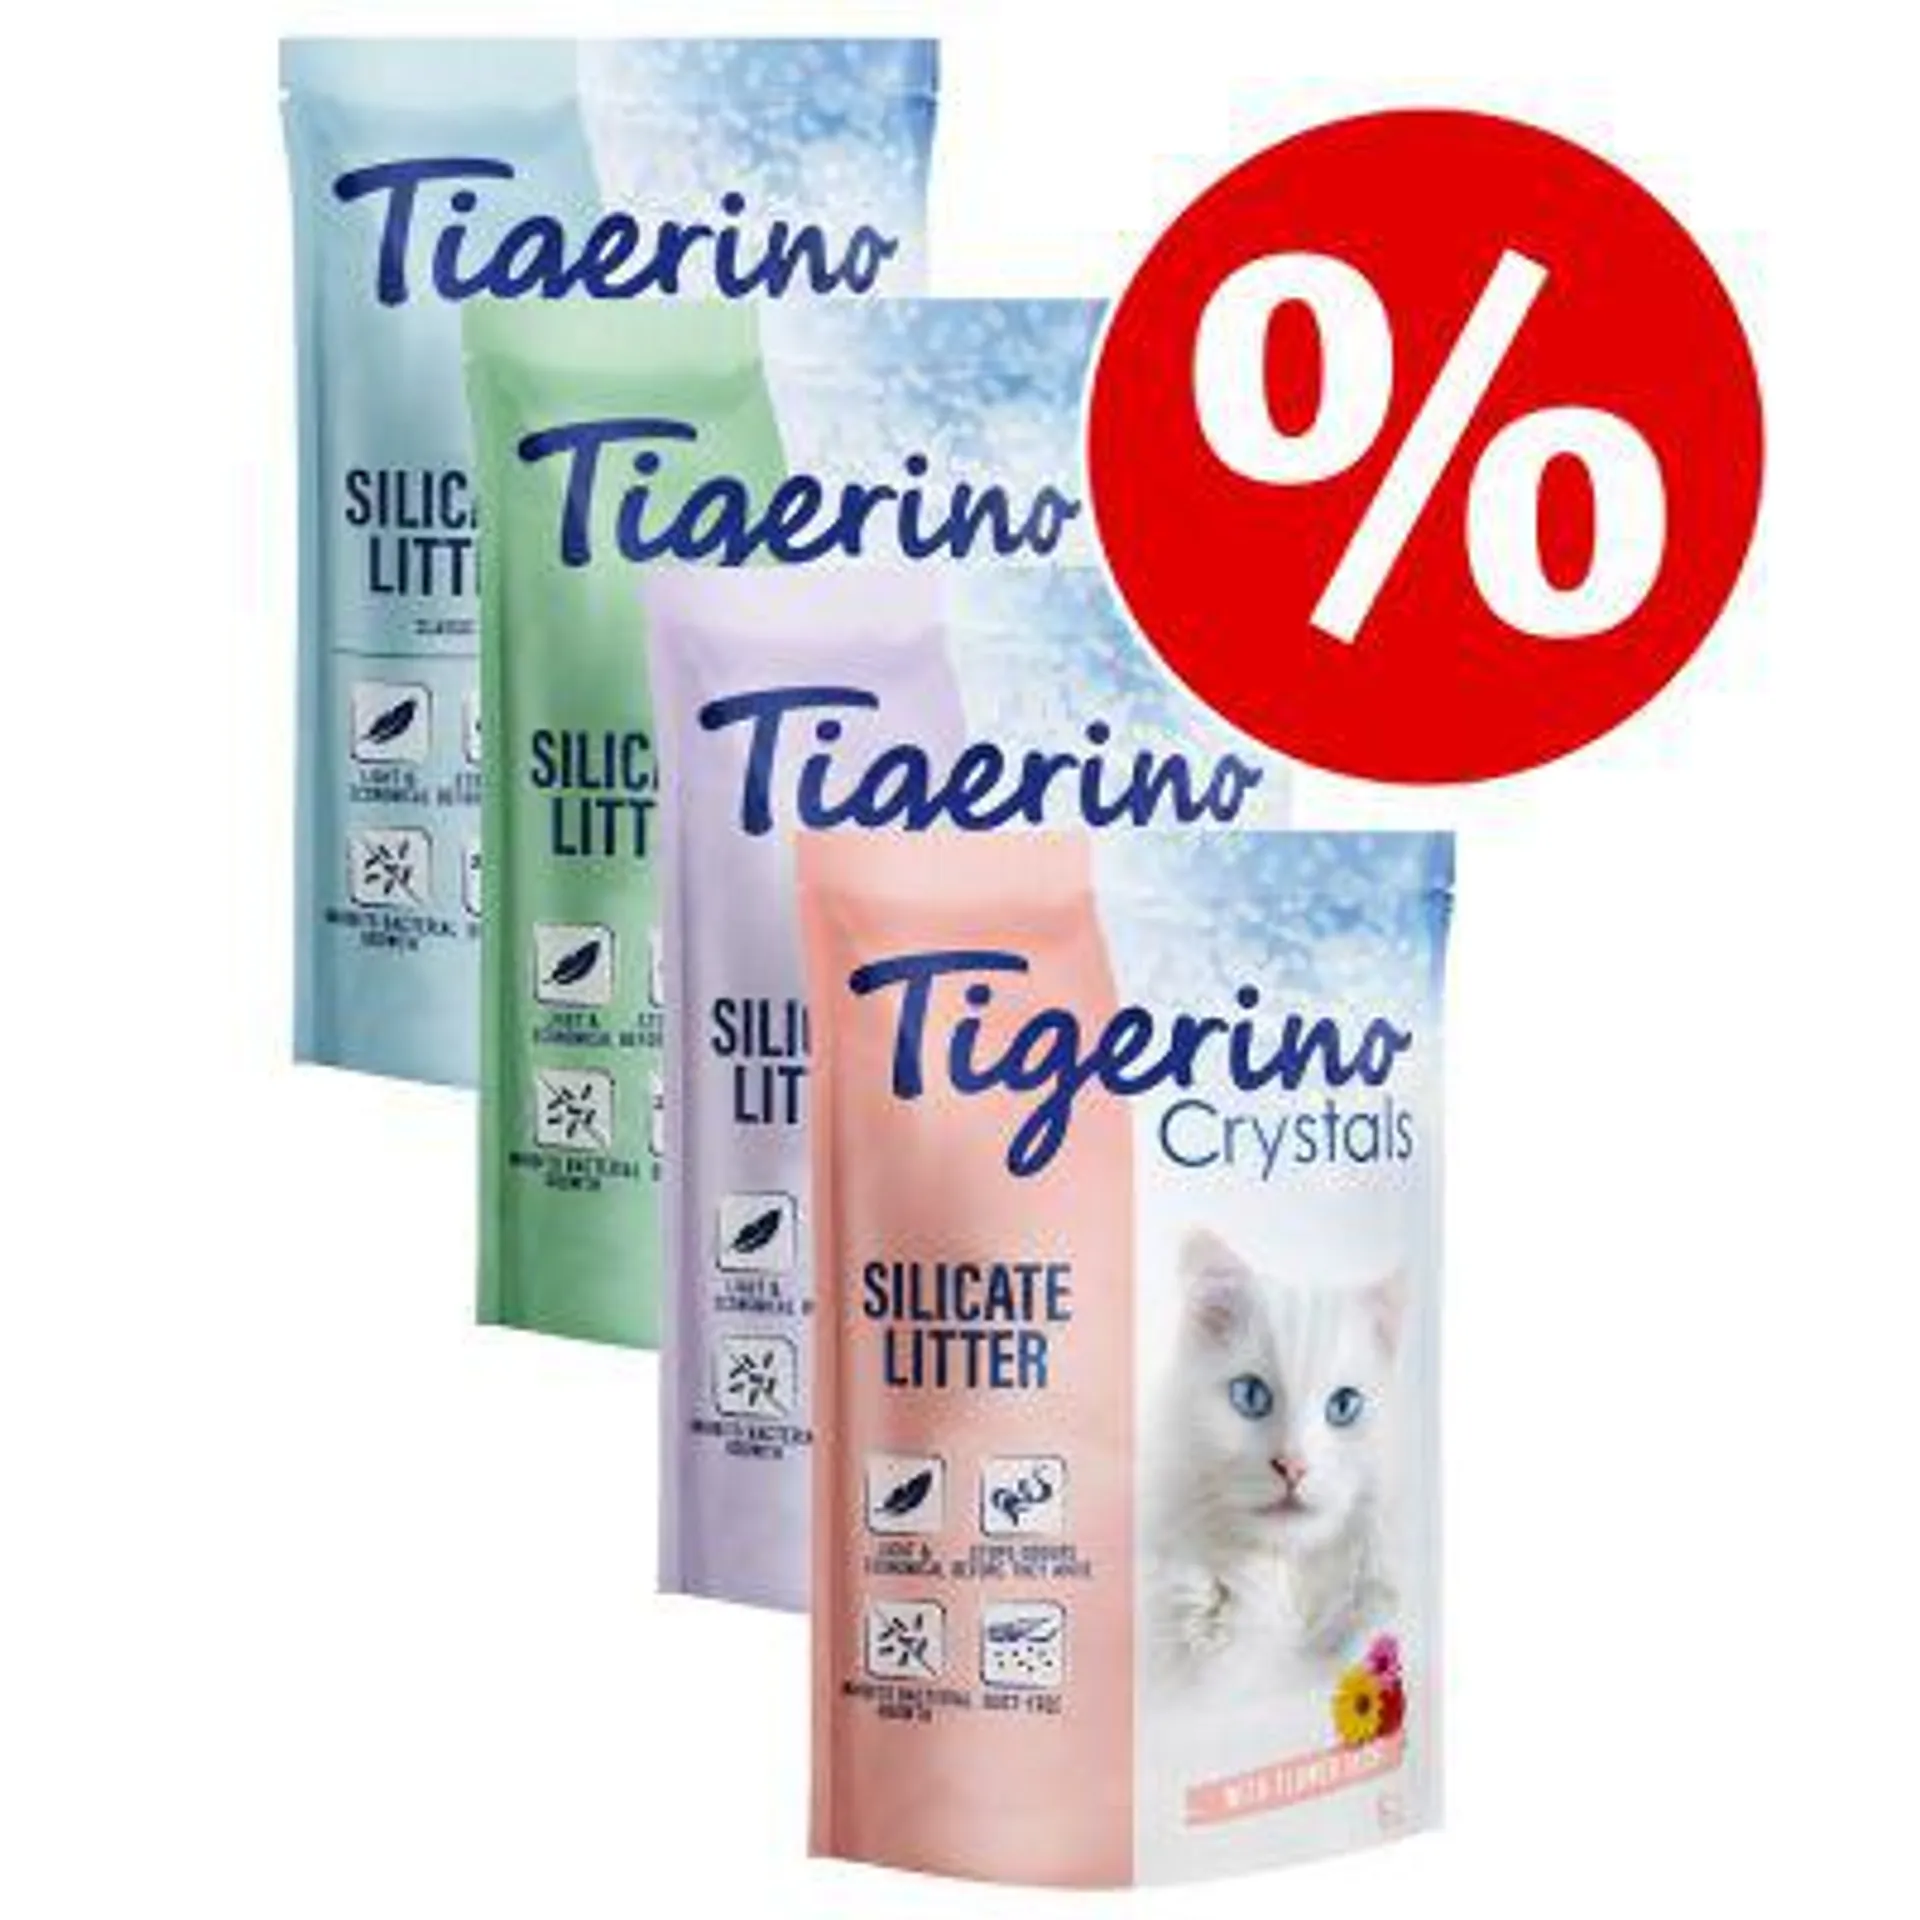 Tigerino Crystals Cat Litter - Special Price!*